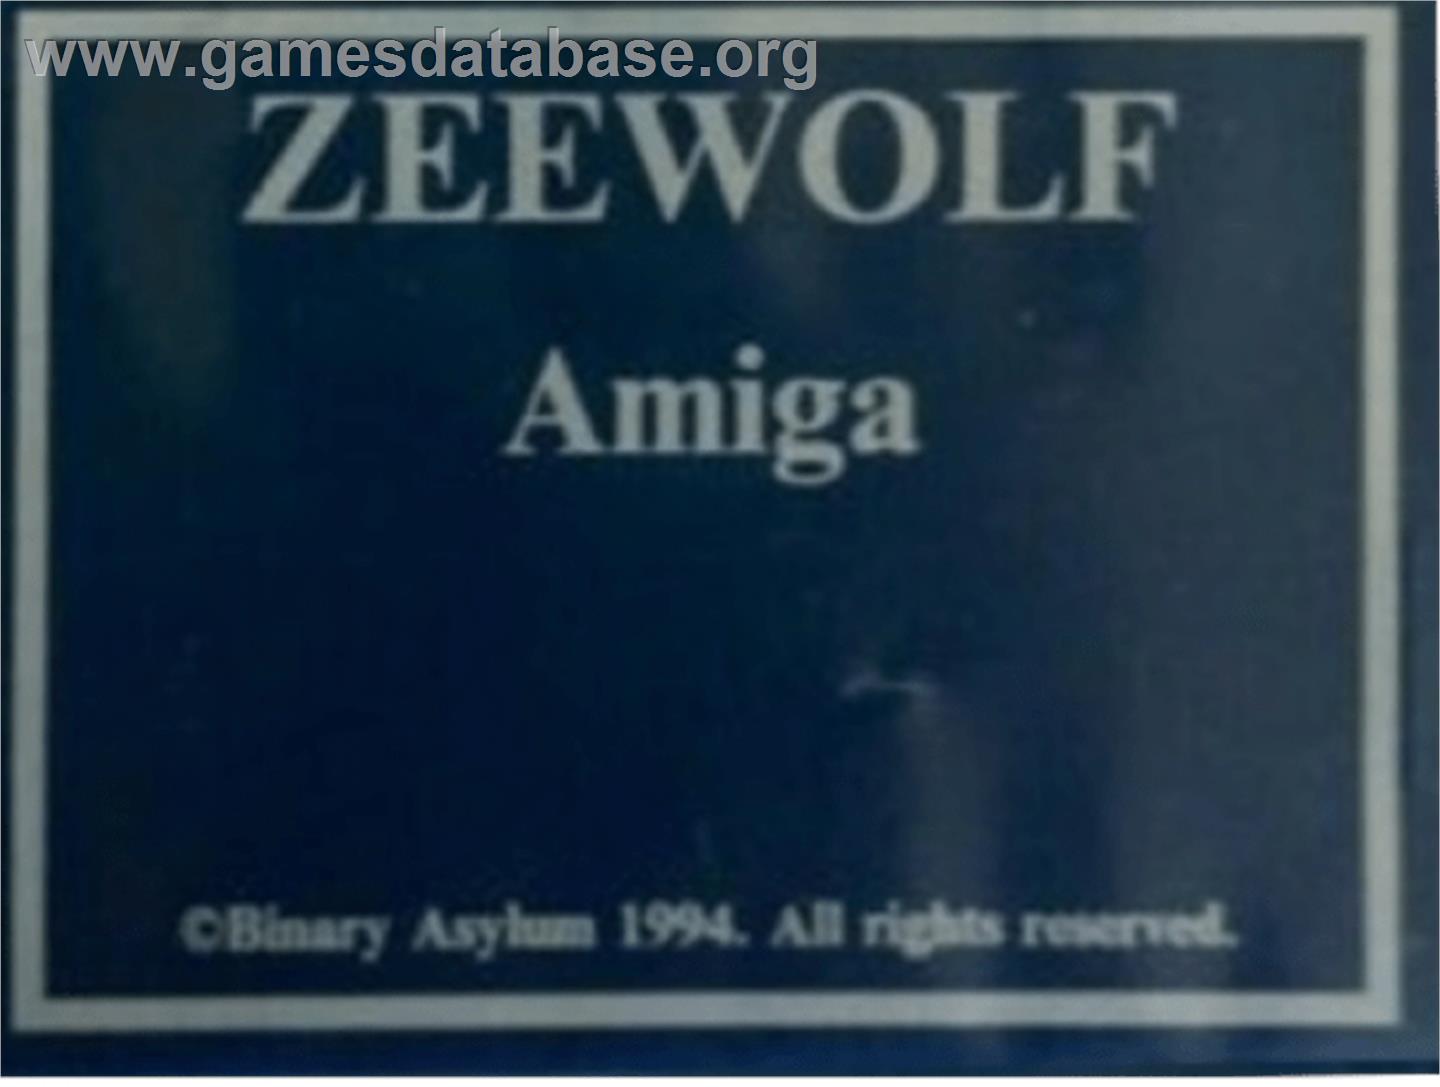 Zeewolf - Commodore Amiga - Artwork - Cartridge Top